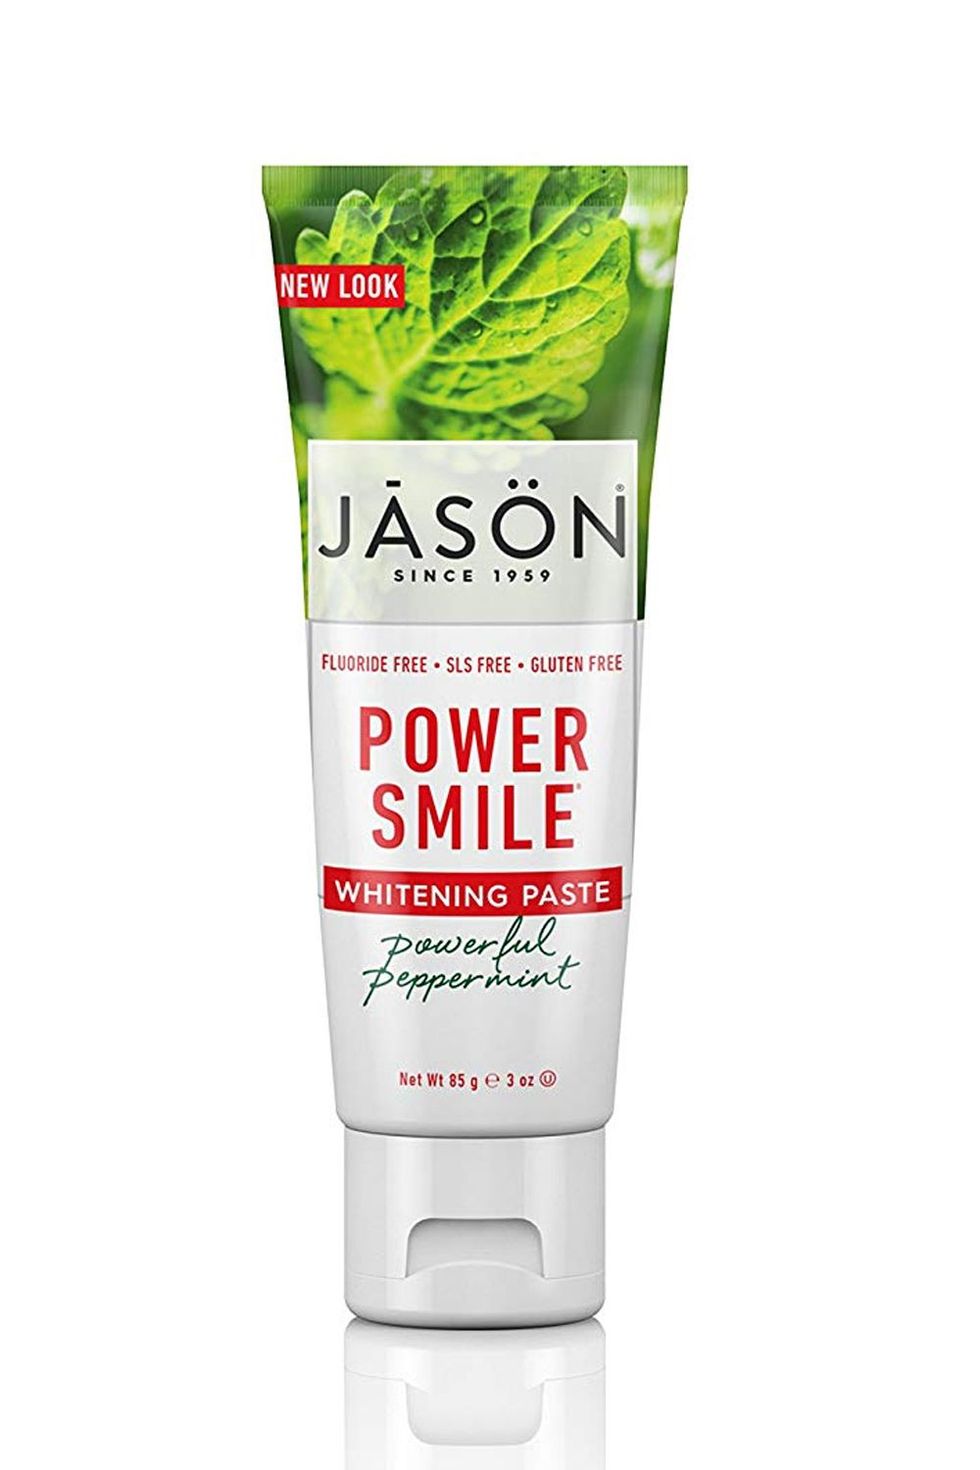 Jason Powersmile Whitening Paste Powerful Peppermint